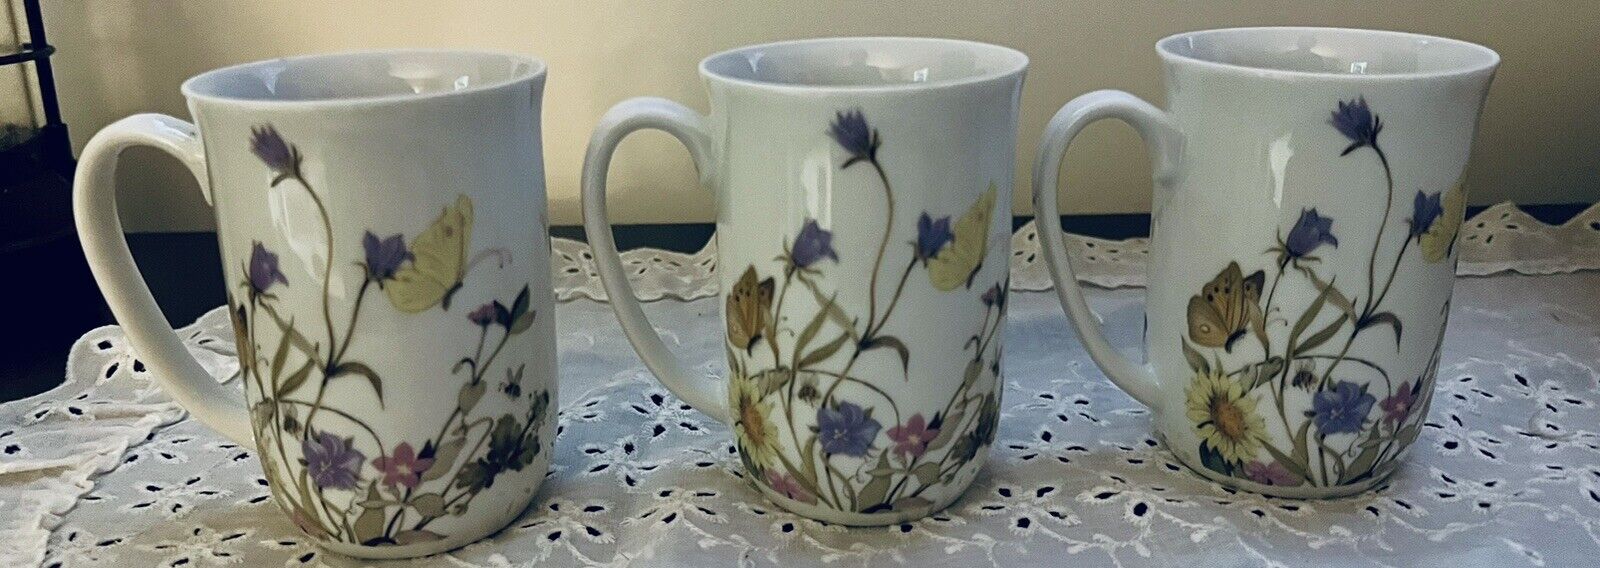 Nature Garden Society Coffee Mug, Floral Mug, Vintage Floral Cup, Enesco (4)